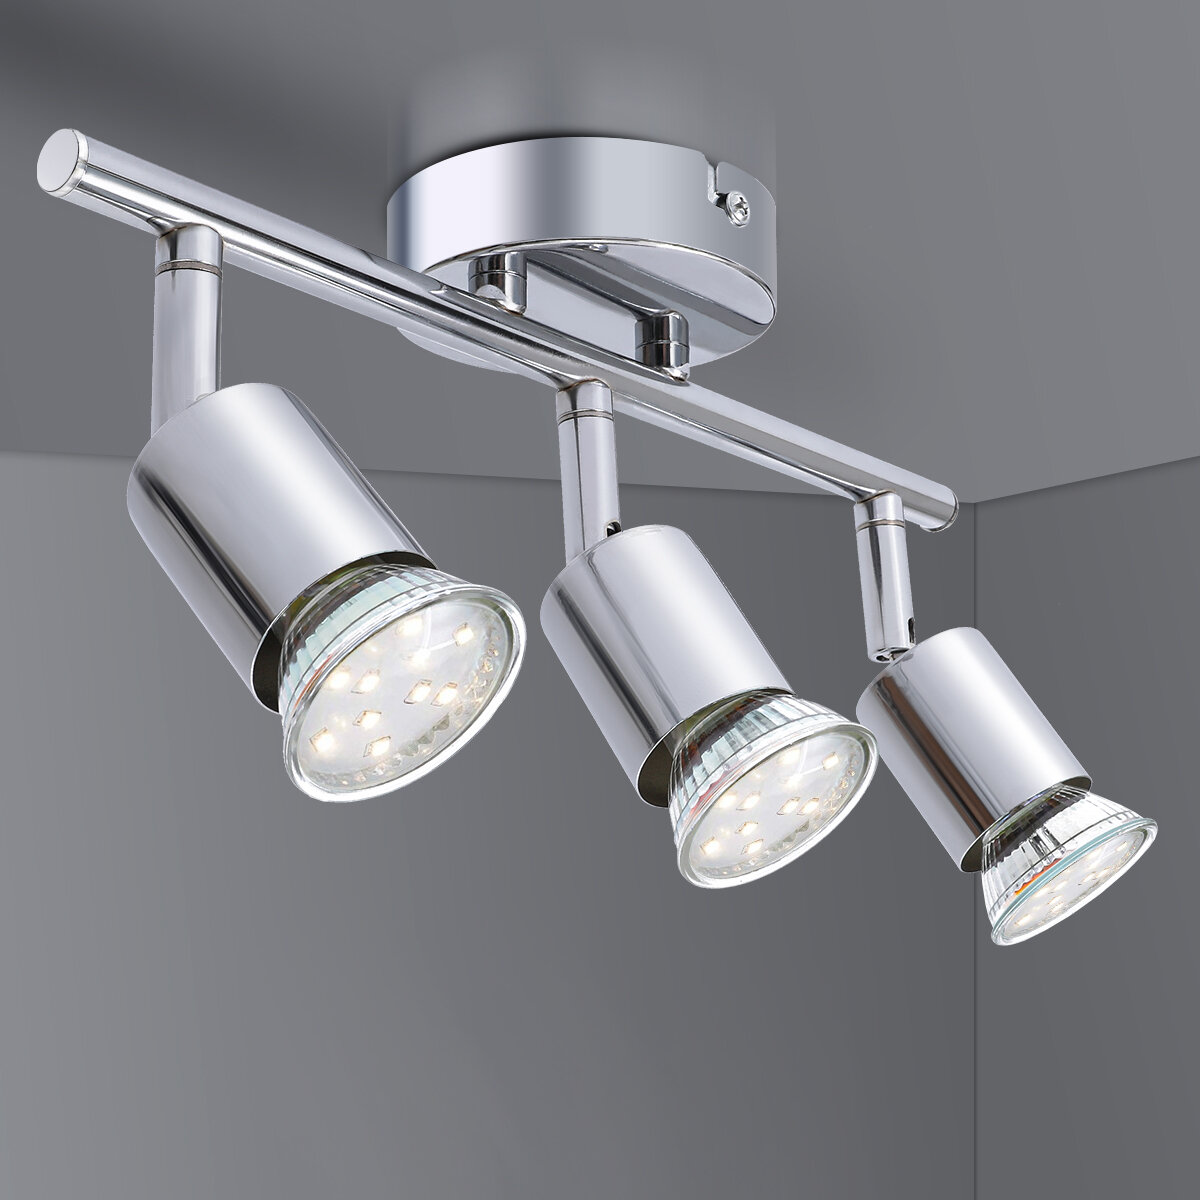 Elfeland 3 Way Pendant Light Ceiling Spotlight Rotatable Swiveling Lamp 3X GU10 Light Bases Angle Adjustable Indoor Ligh